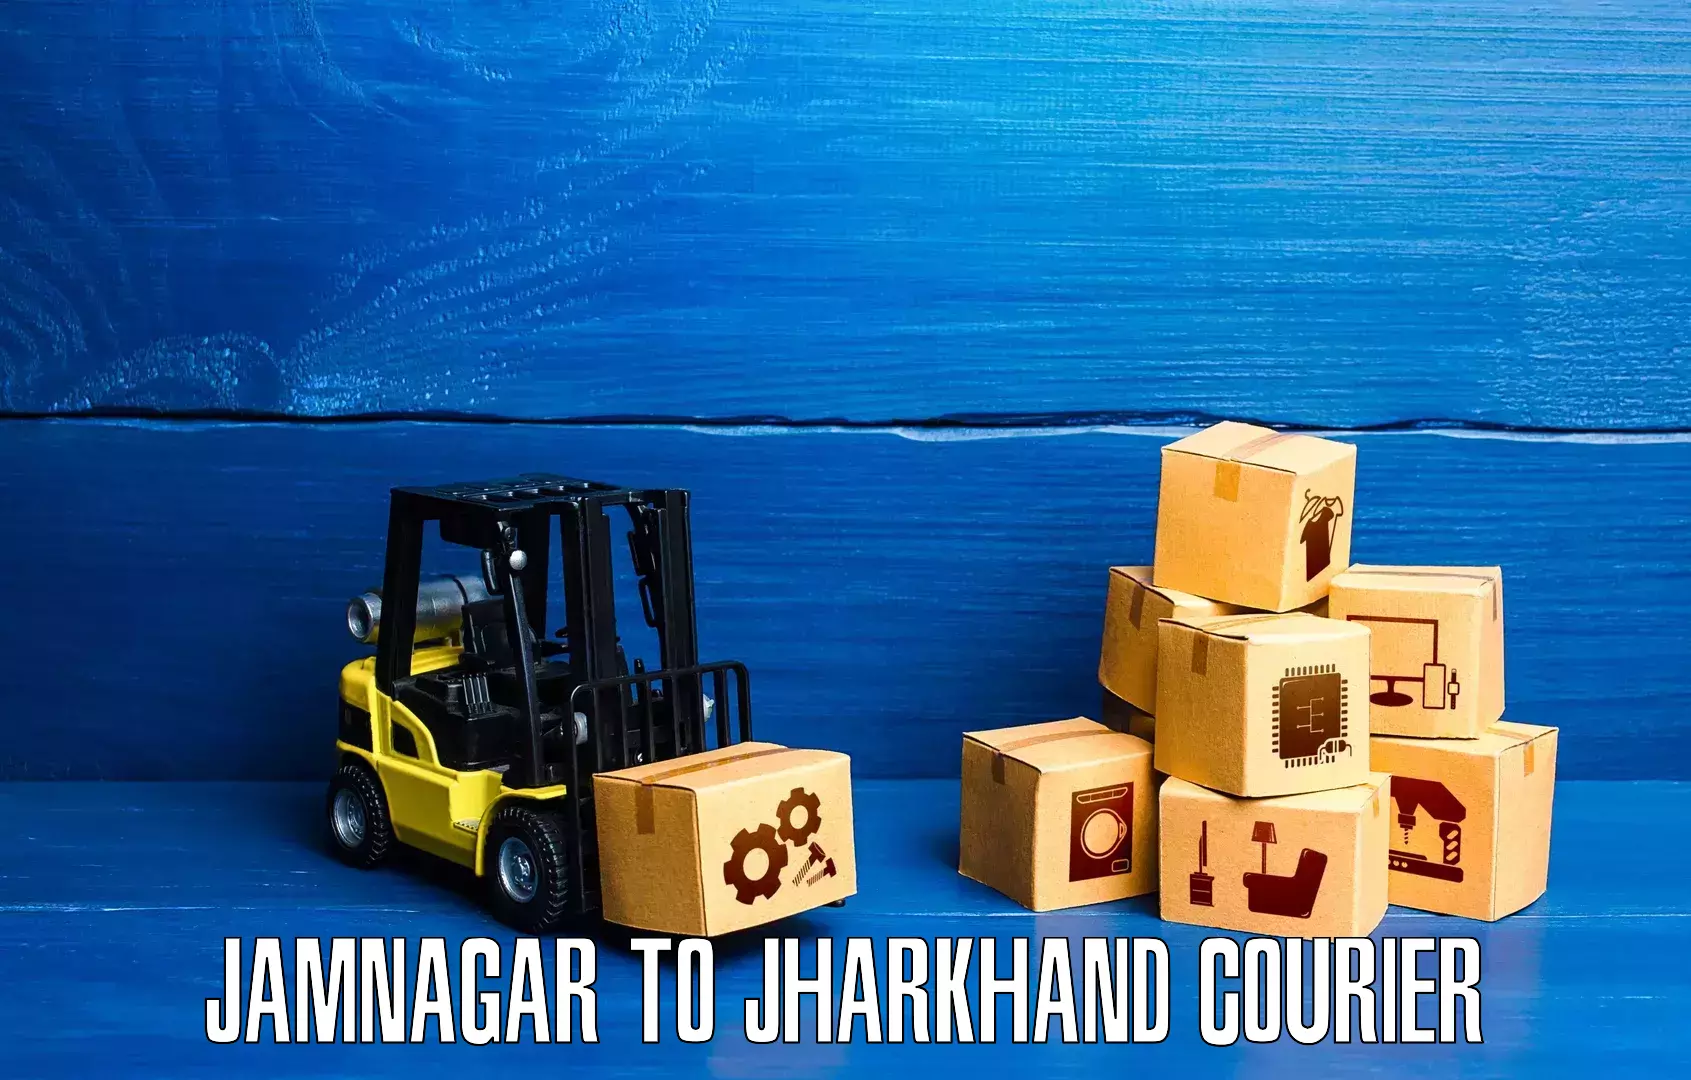 24-hour courier services in Jamnagar to Bokaro Steel City